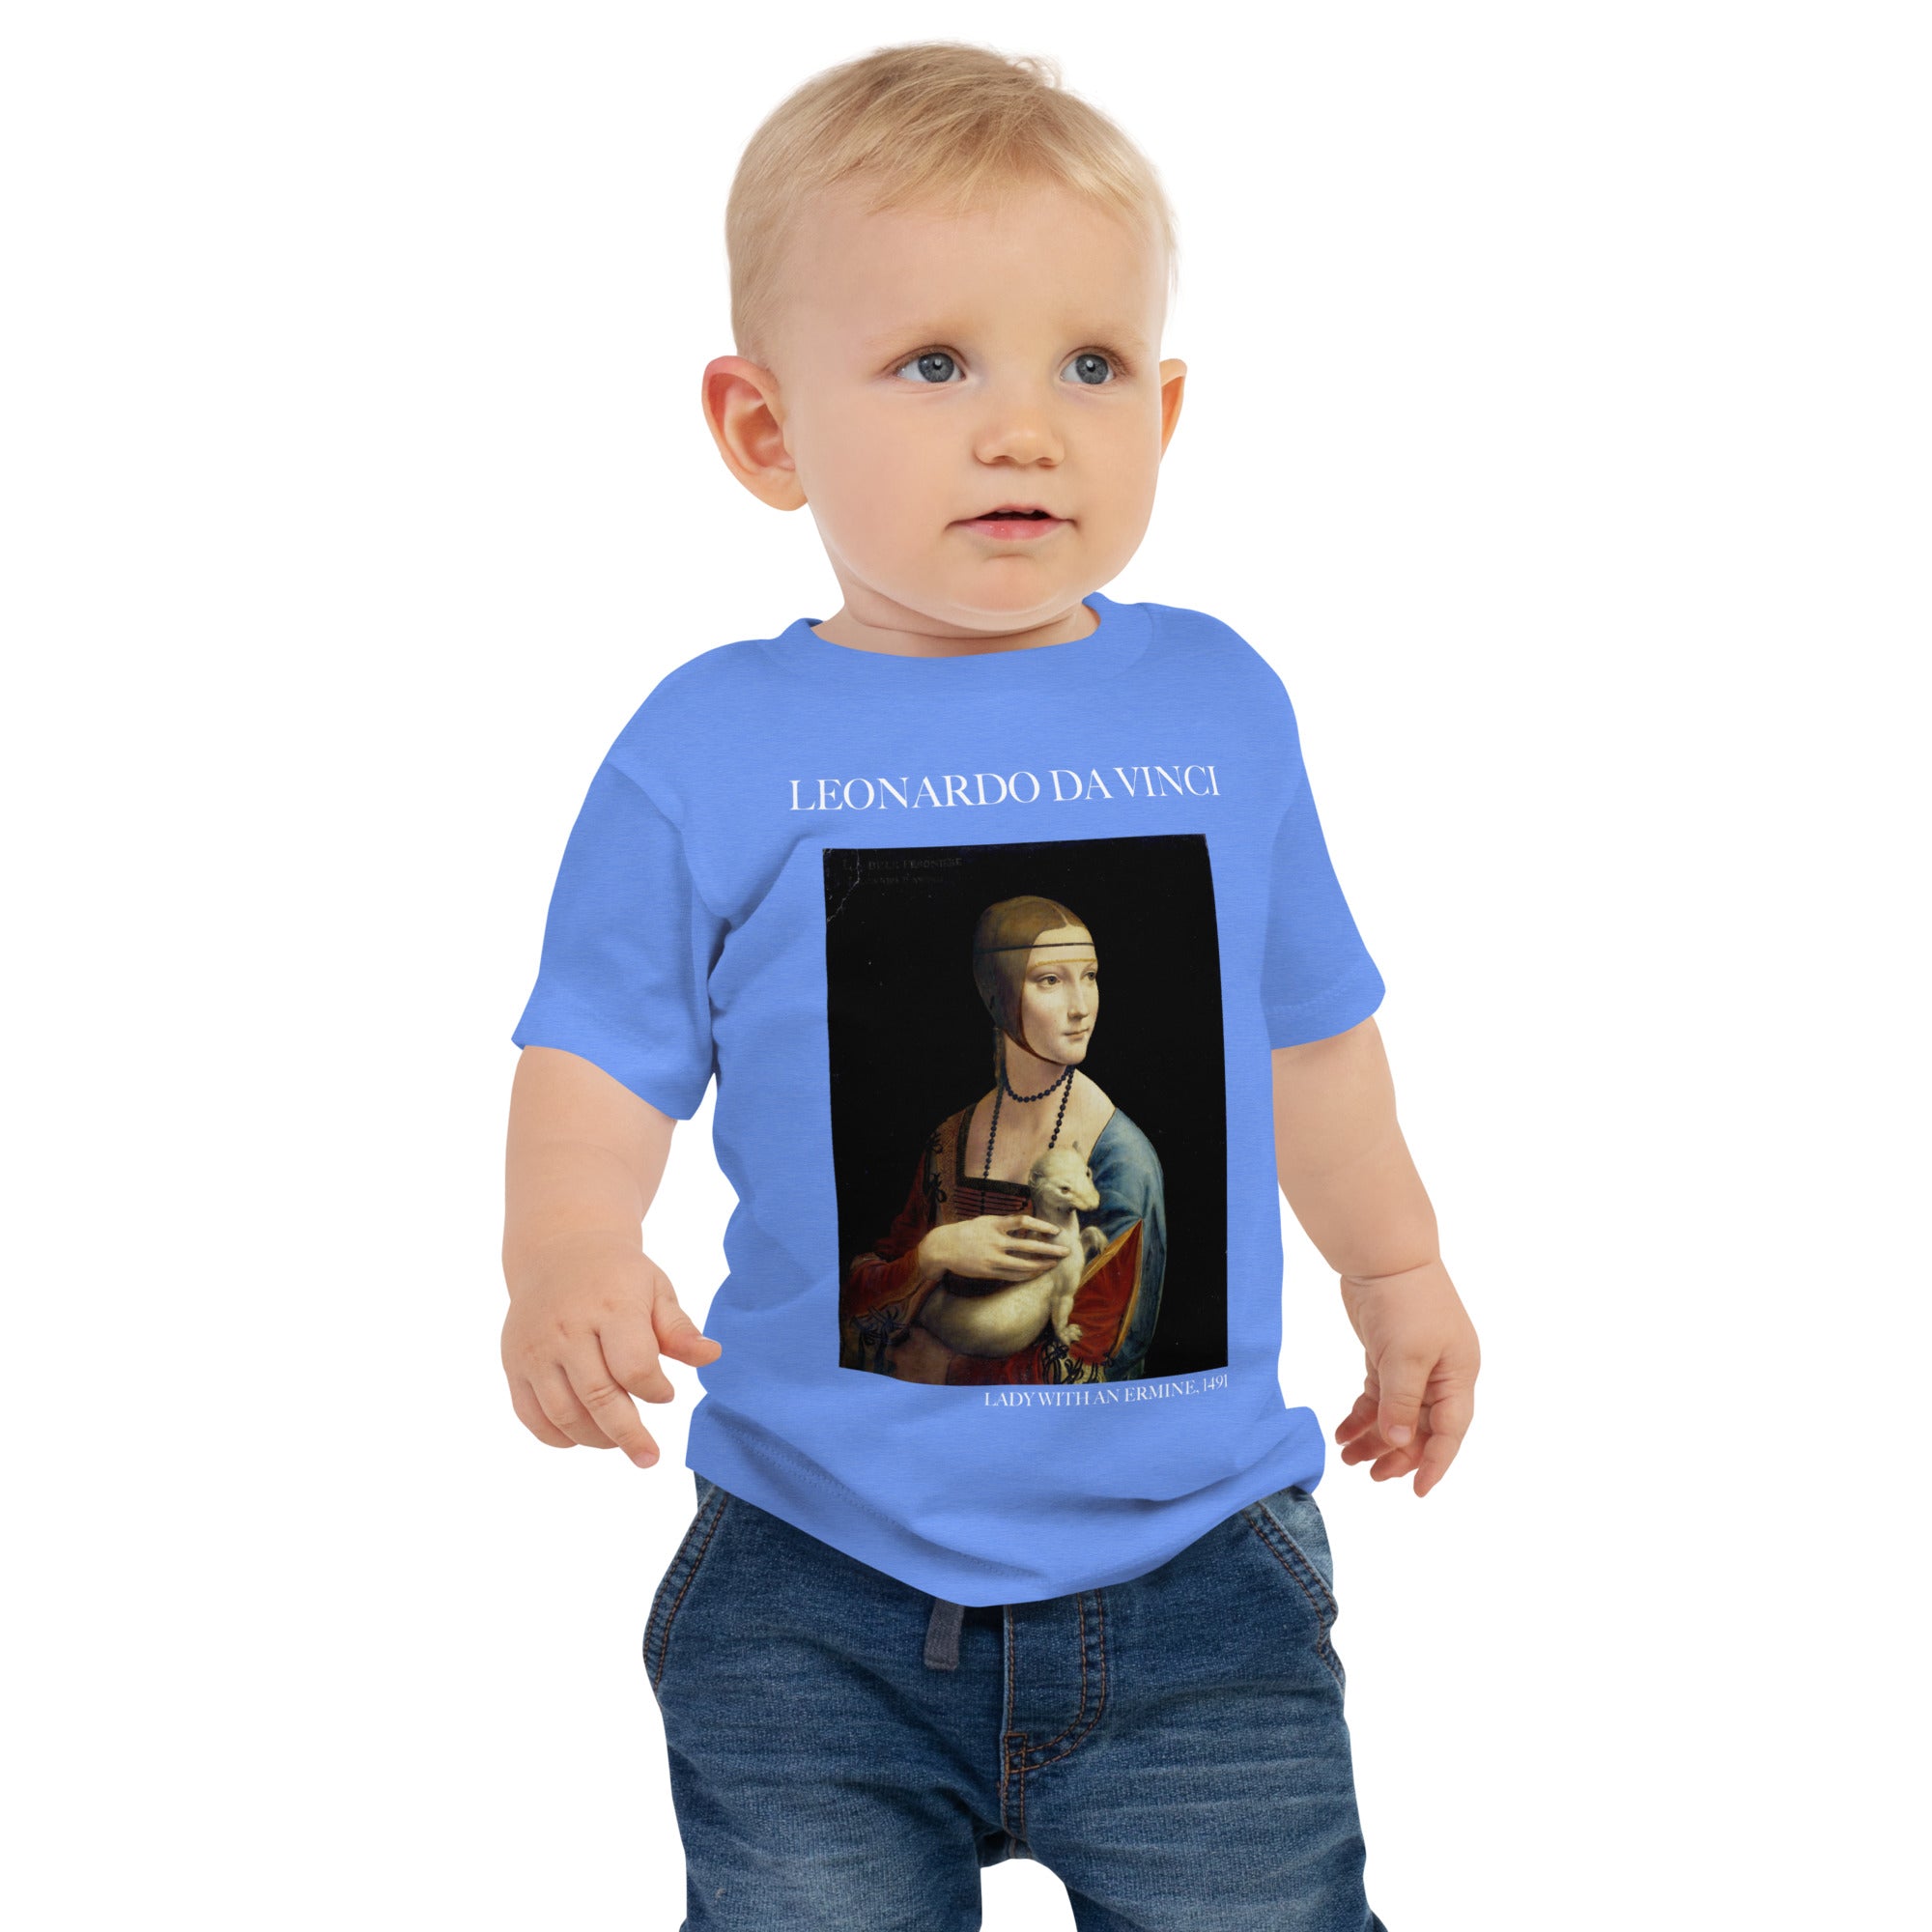 Leonardo da Vinci 'Lady with an Ermine' Famous Painting Baby Staple T-Shirt | Premium Baby Art Tee